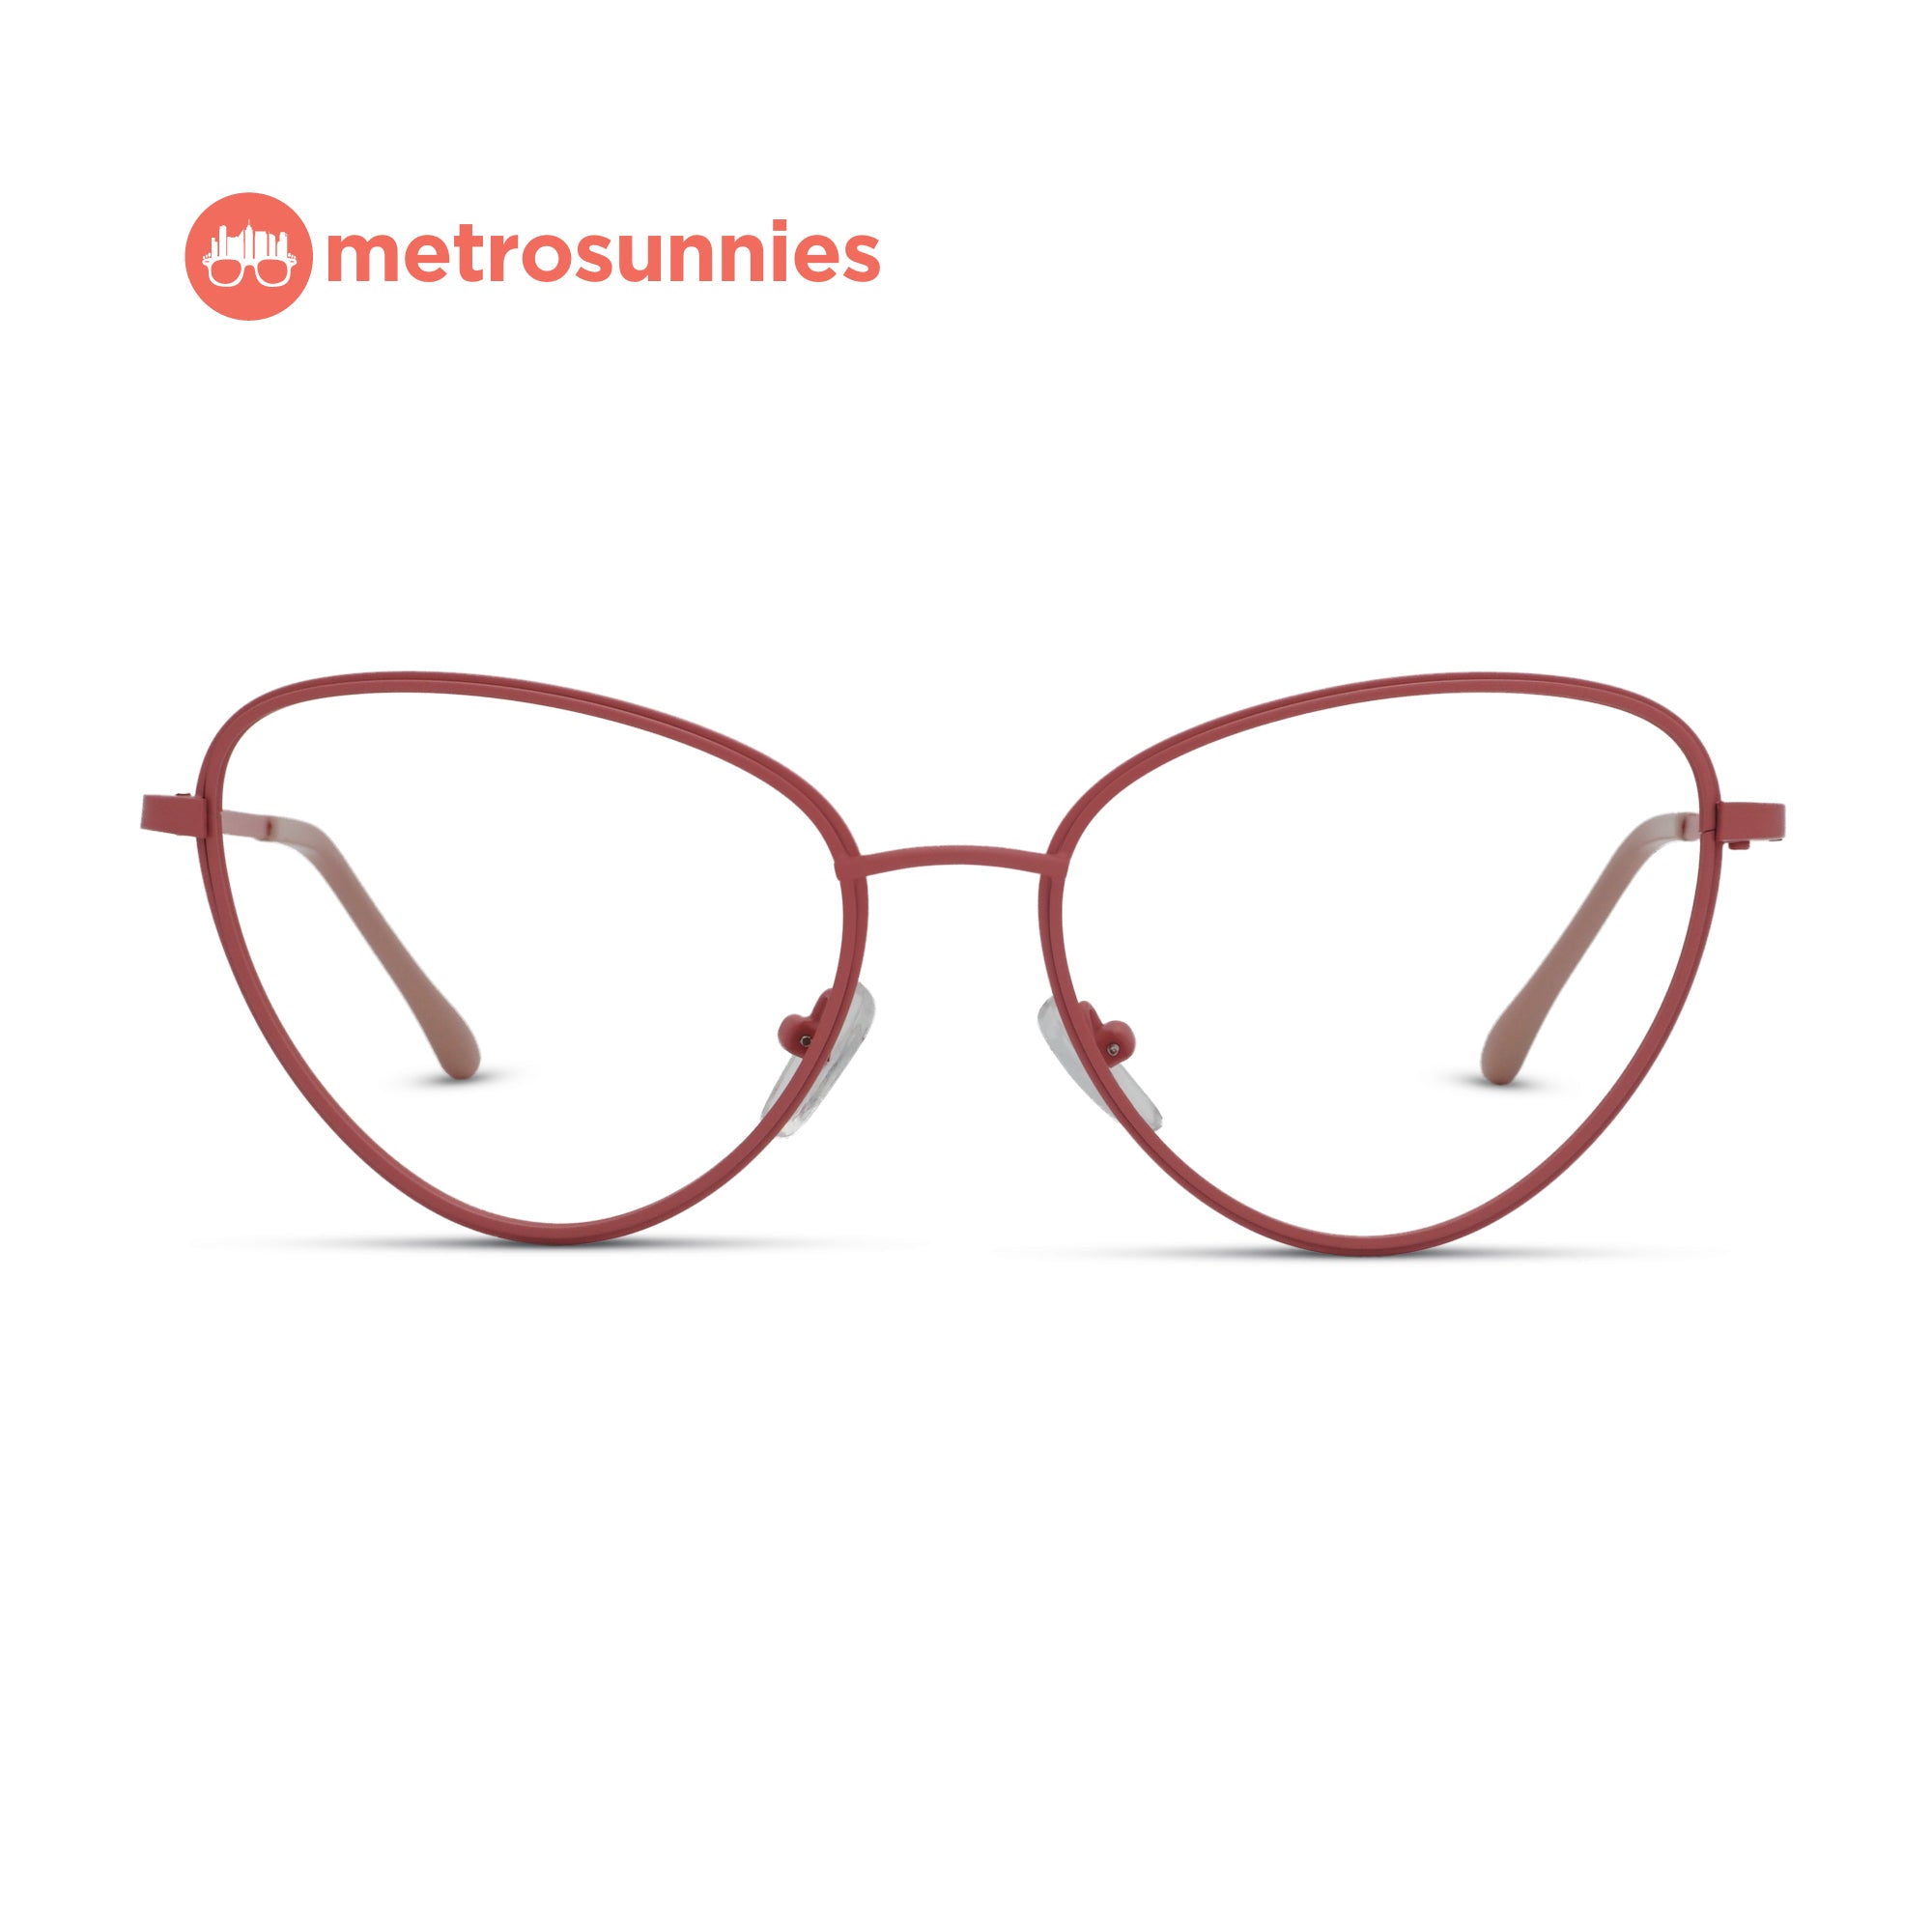 MetroSunnies Astra Specs (Sakura) / Replaceable Lens / Eyeglasses for Men and Women